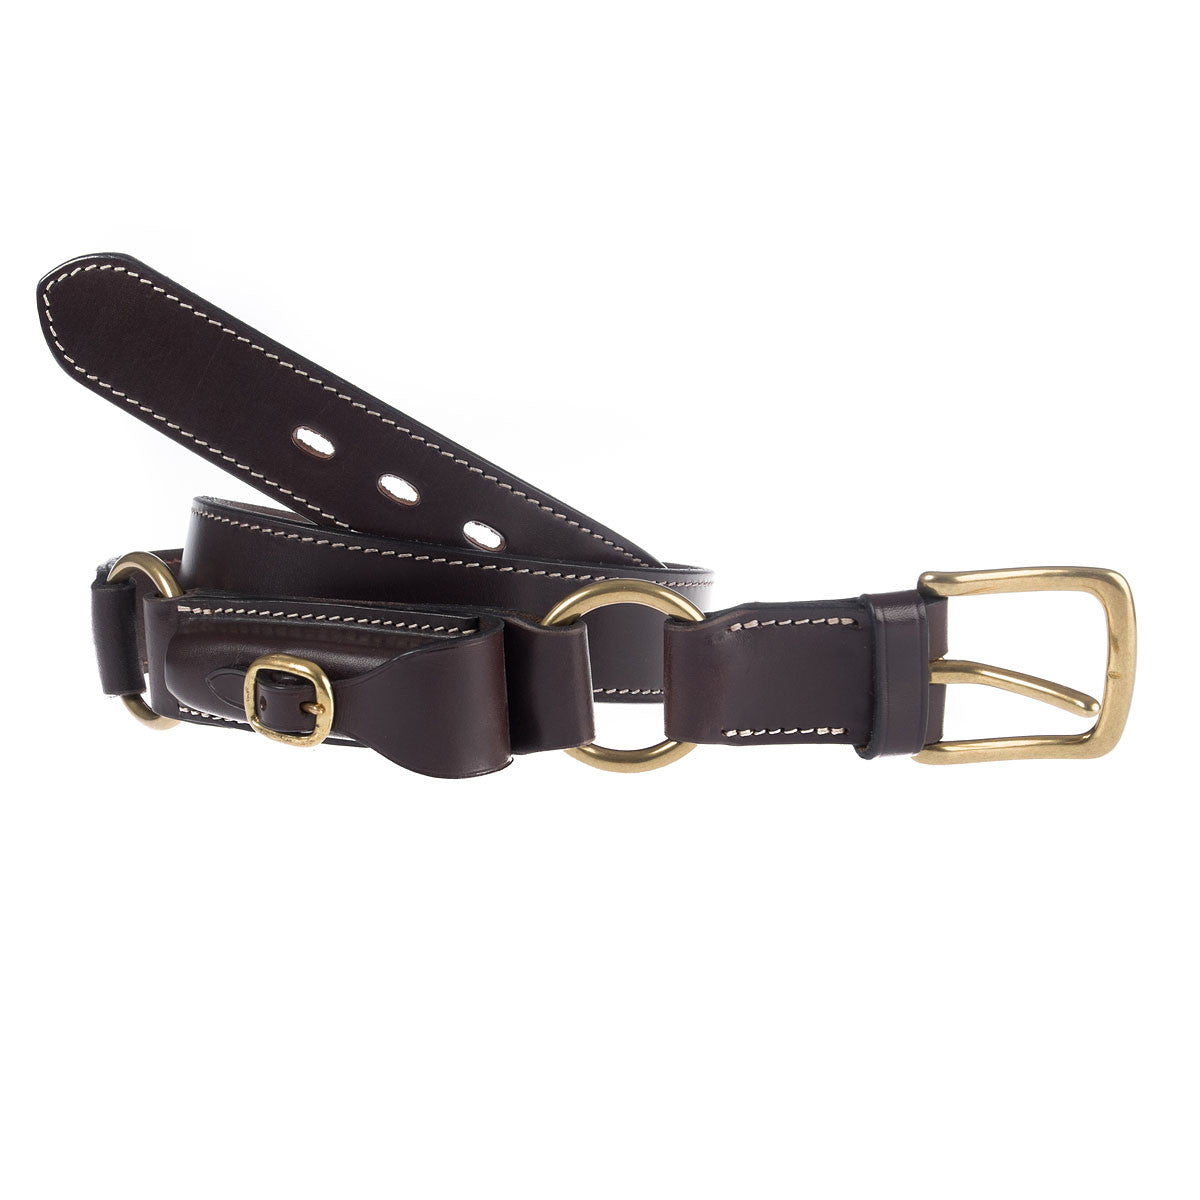 Hobble Belt With Pouch - Aussie Bush Leather